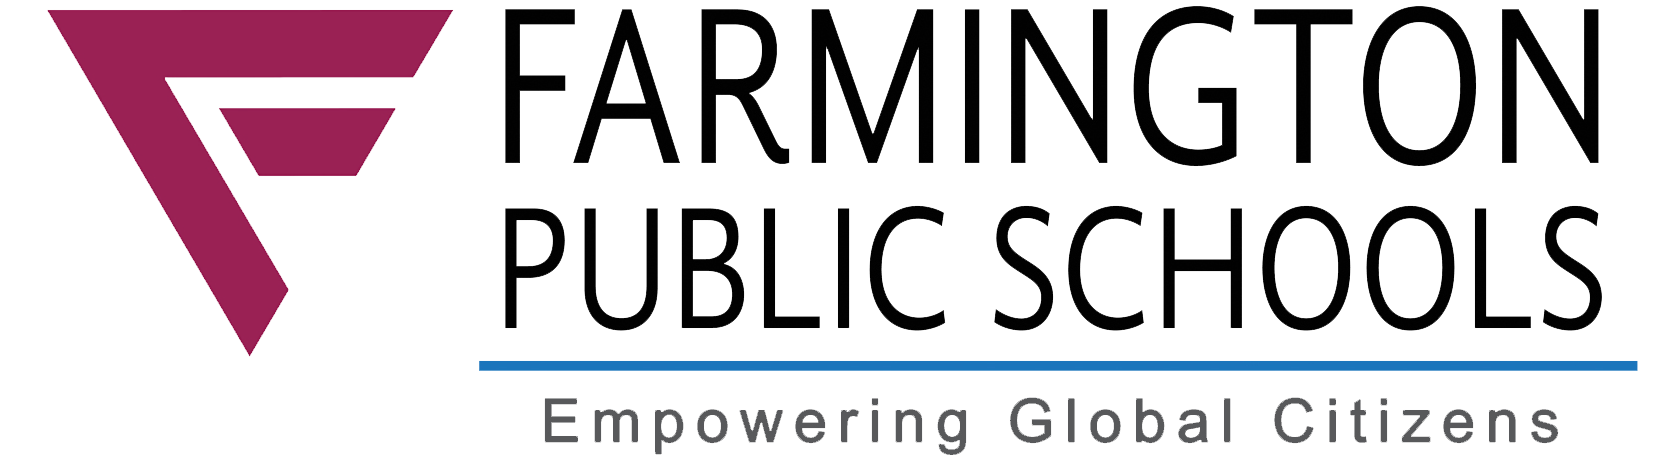 Farmington Public Schools Logo - Large